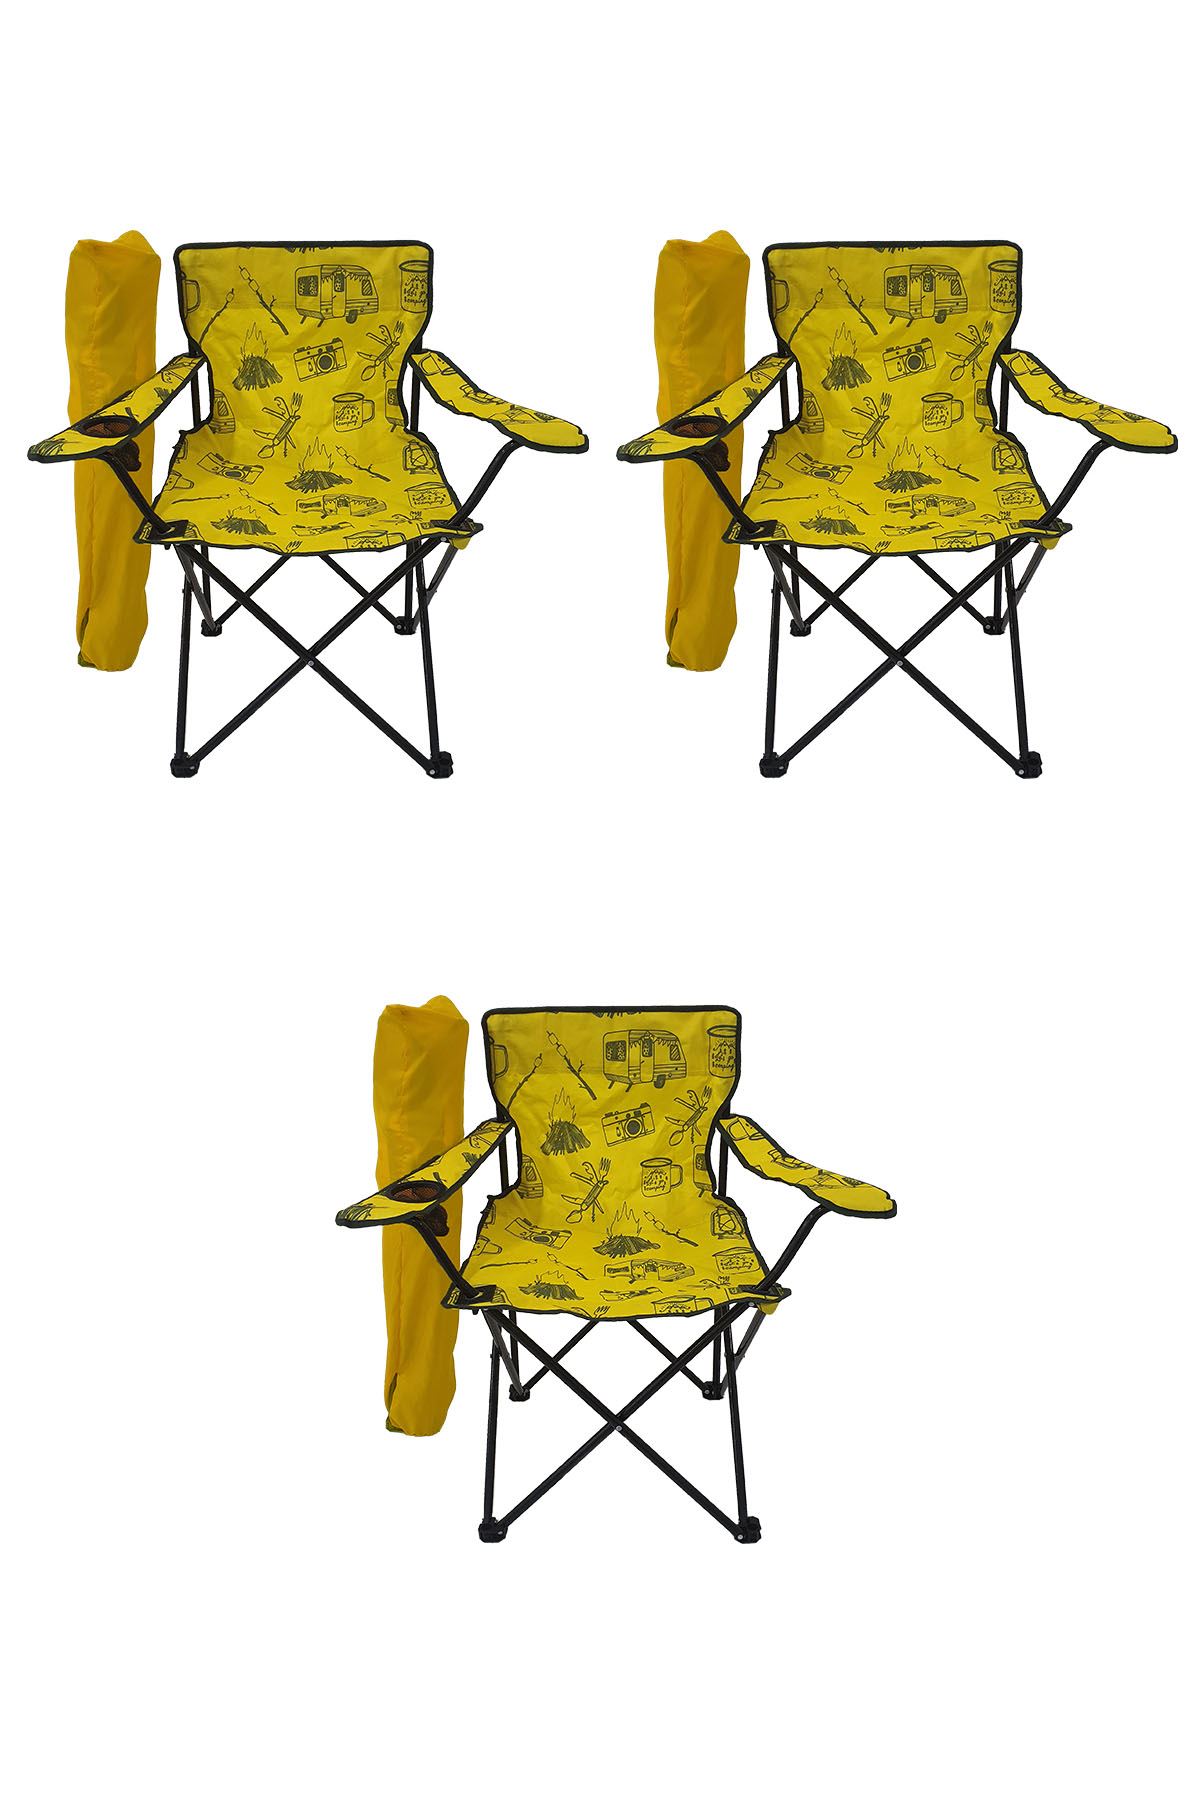 Bofigo 3 Pcs Camping Chair Folding Chair Garden Chair Picnic Beach Chair Patterned Yellow